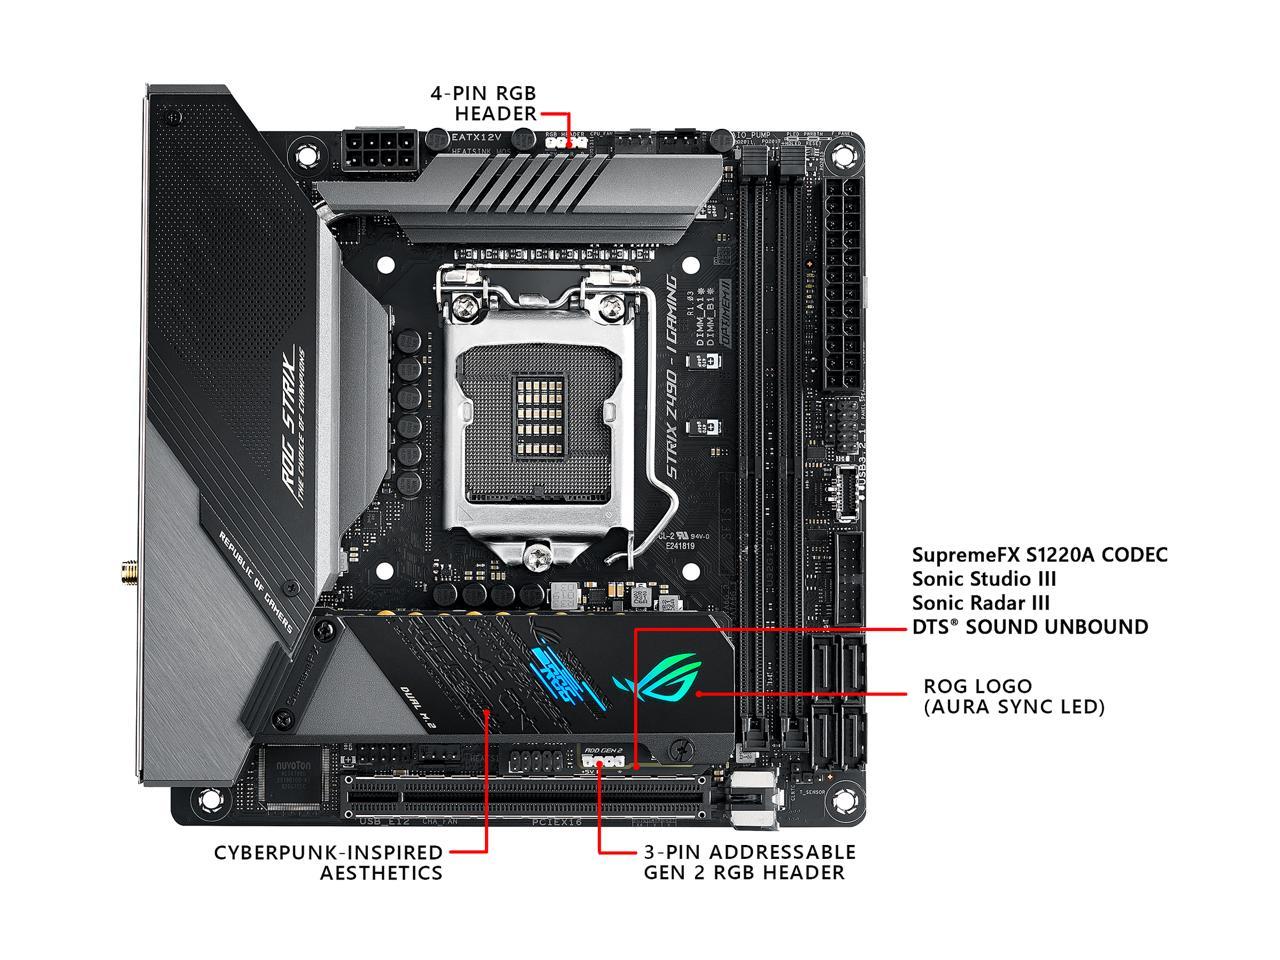 ASUS ROG STRIX Z490-I GAMING (WiFi 6) LGA 1200 (Intel 10th Gen) Intel Z490 SATA 6Gb/s Mini ITX Intel Motherboard (8+2 Power Stages, DDR4 4800, Intel 2.5Gb Ethernet, USB 3.2 Front Panel Type-C, HDMI 2.0a and AURA Sync)